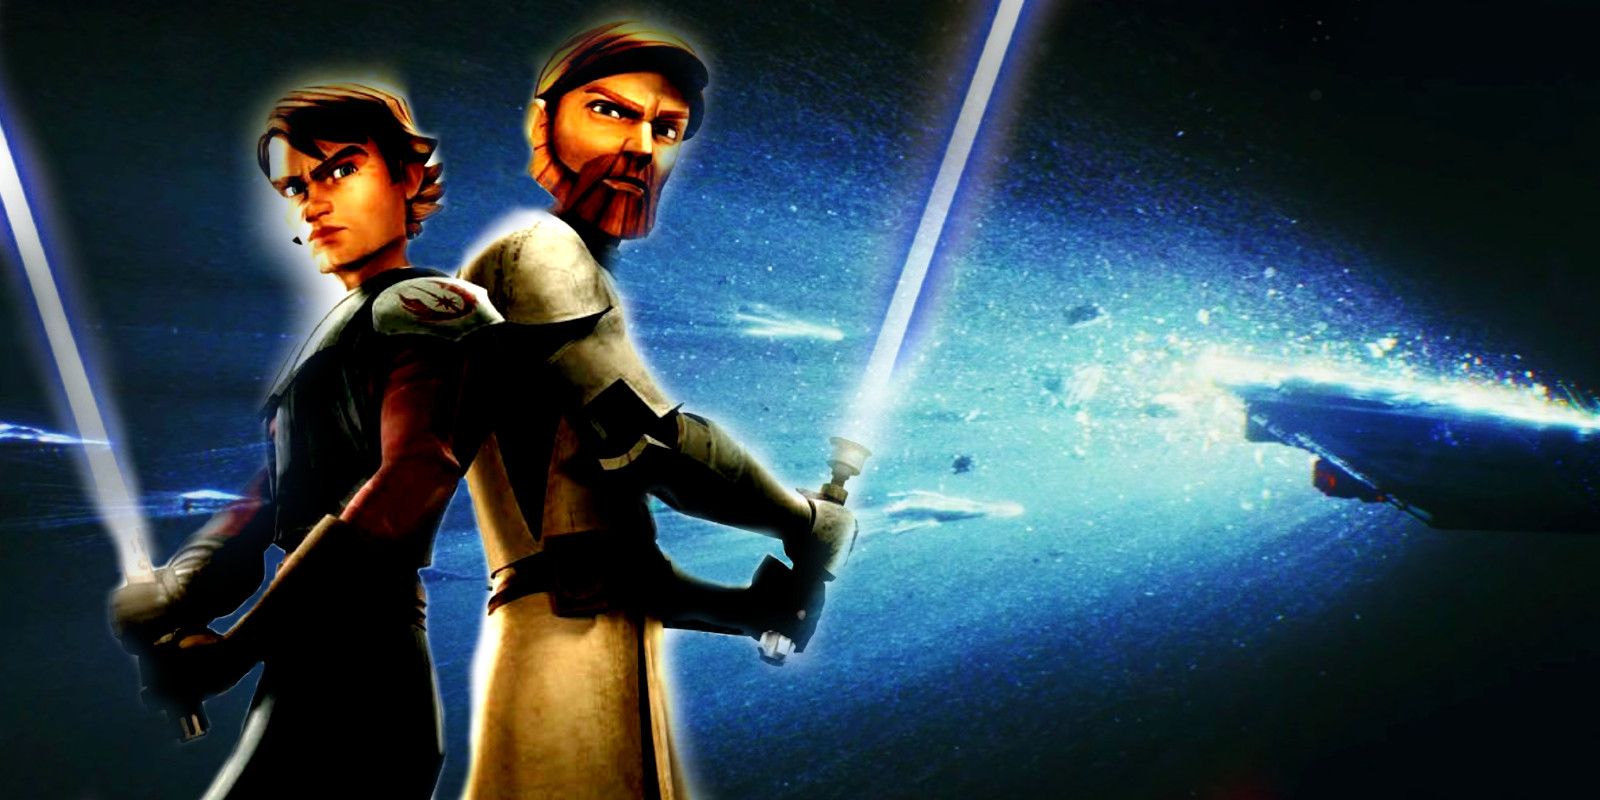 The Clone Wars' Anakin Skywalker and Obi-Wan Kenobi in front of The Last Jedi's Holdo Maneuver visual